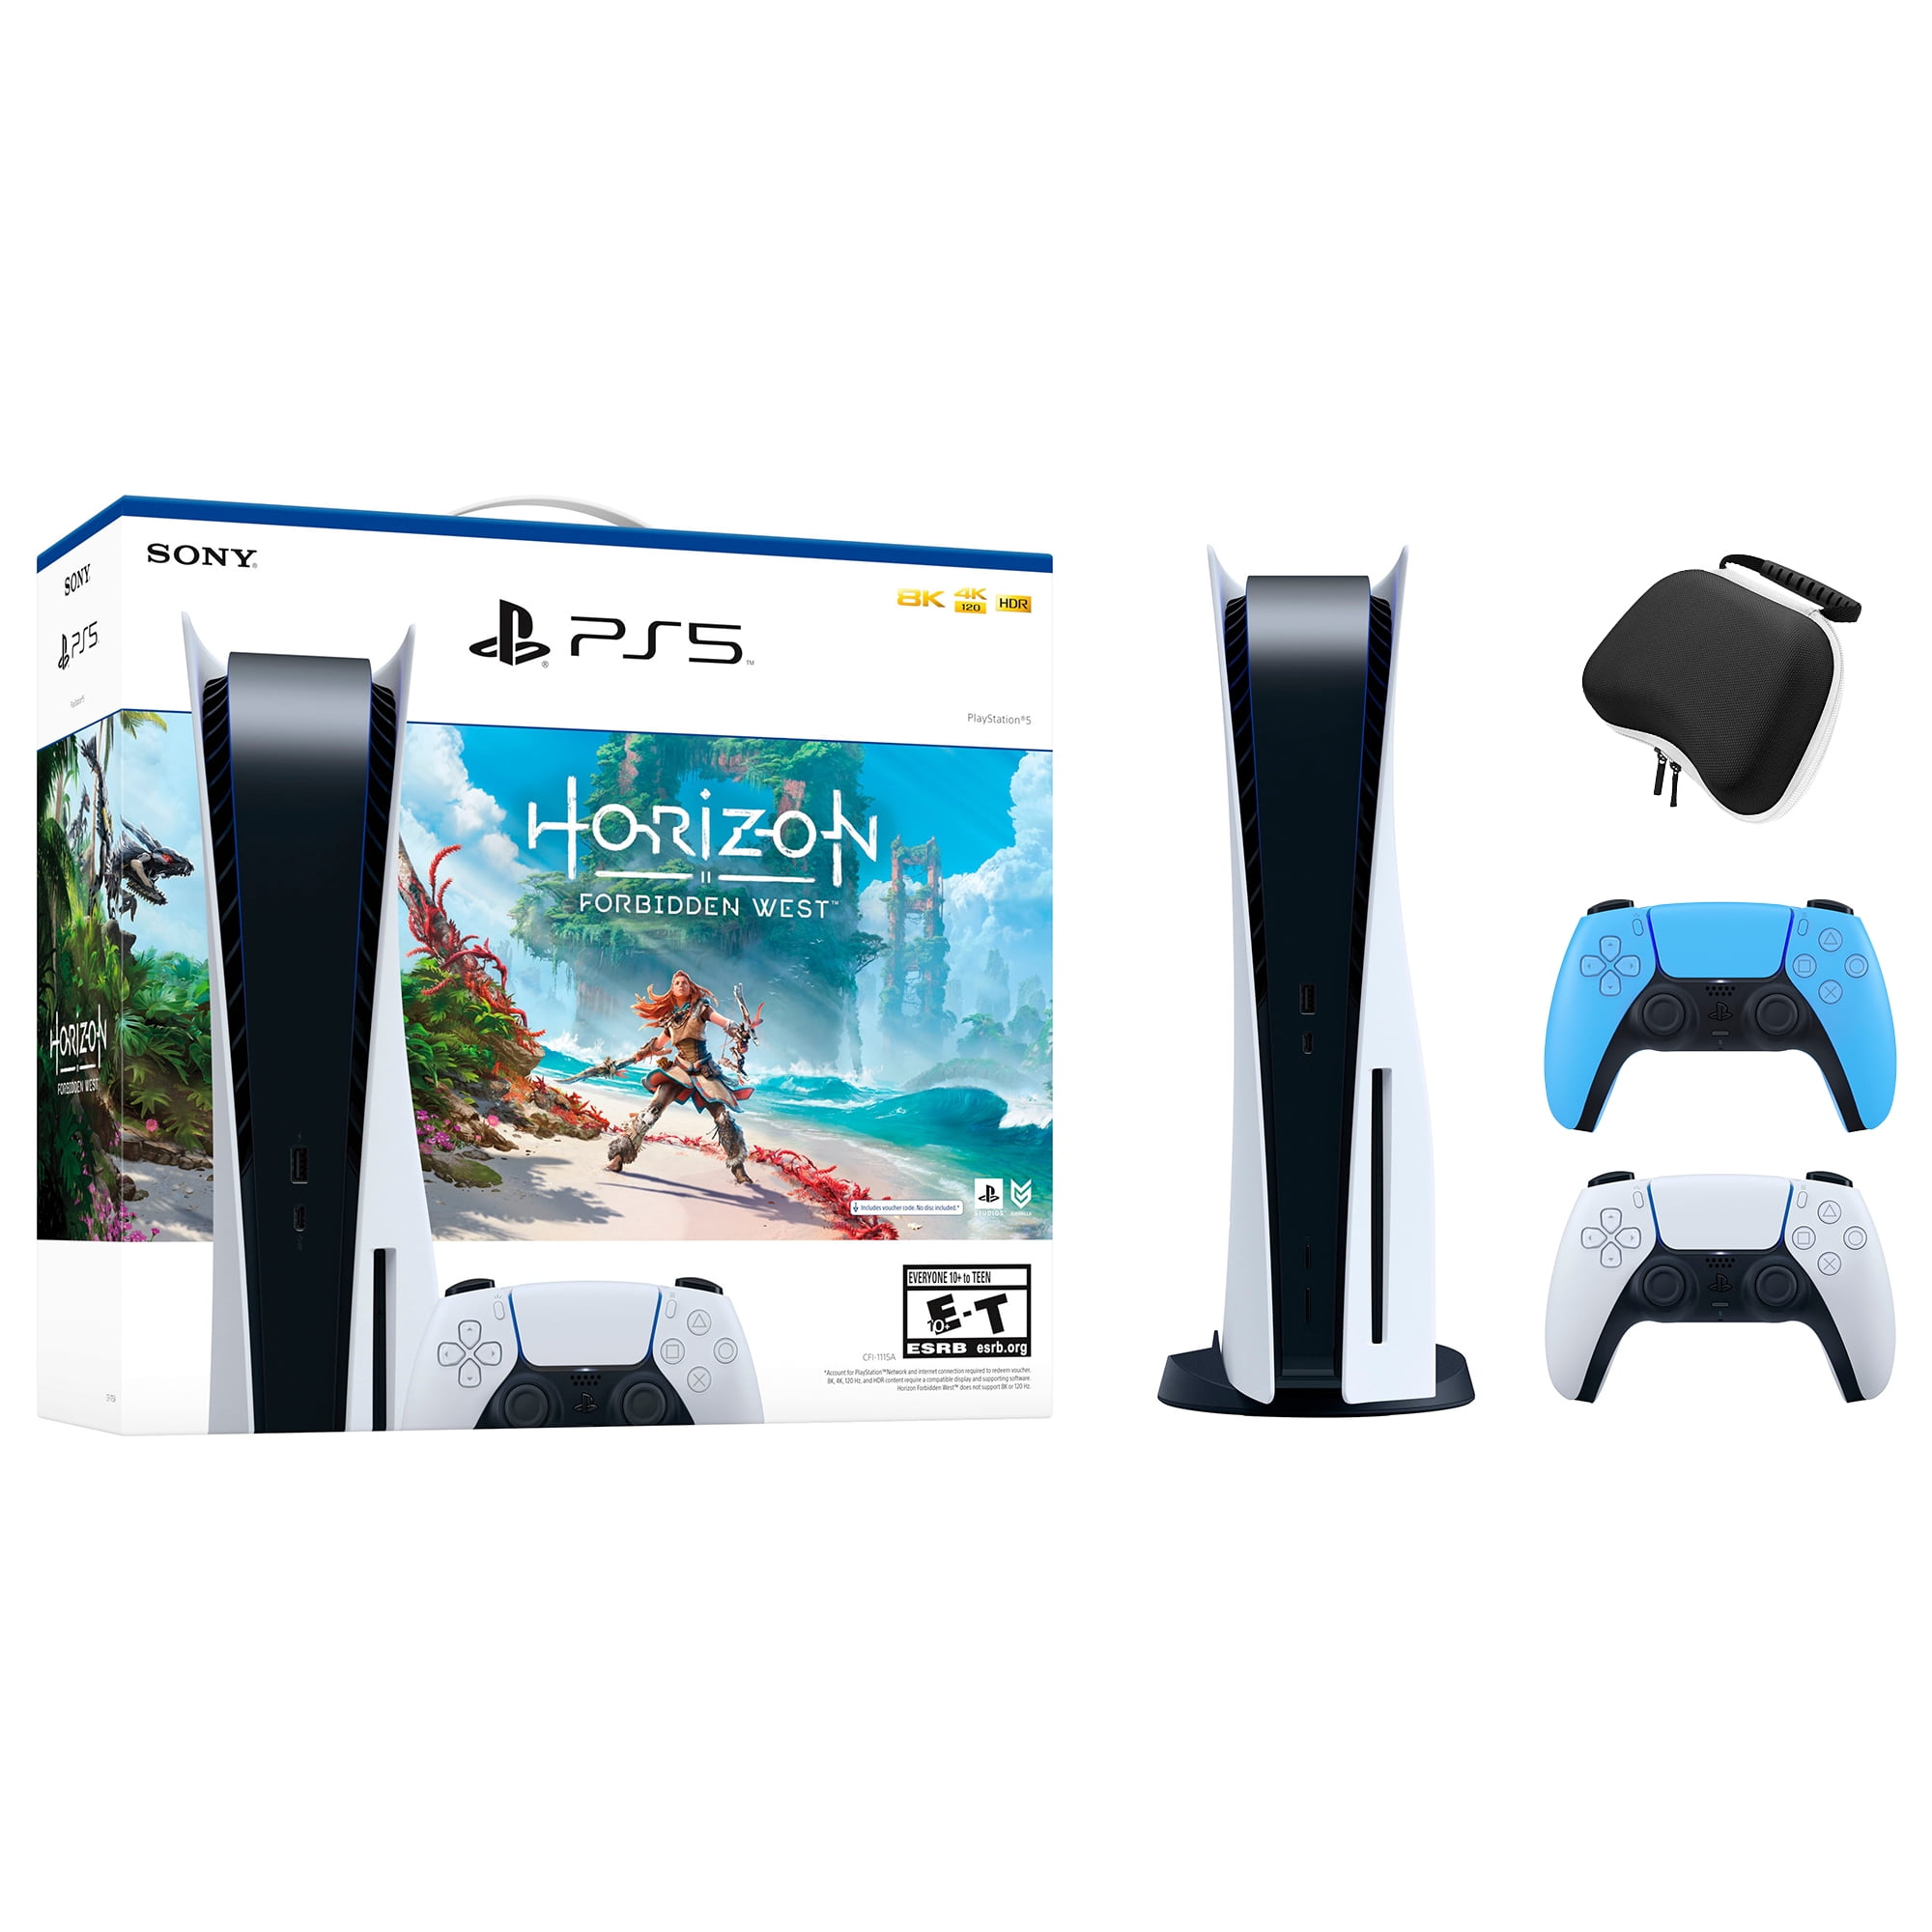  Horizon Forbidden West Launch Edition - PlayStation 5 - PlayStation  5 : Solutions 2 Go Inc